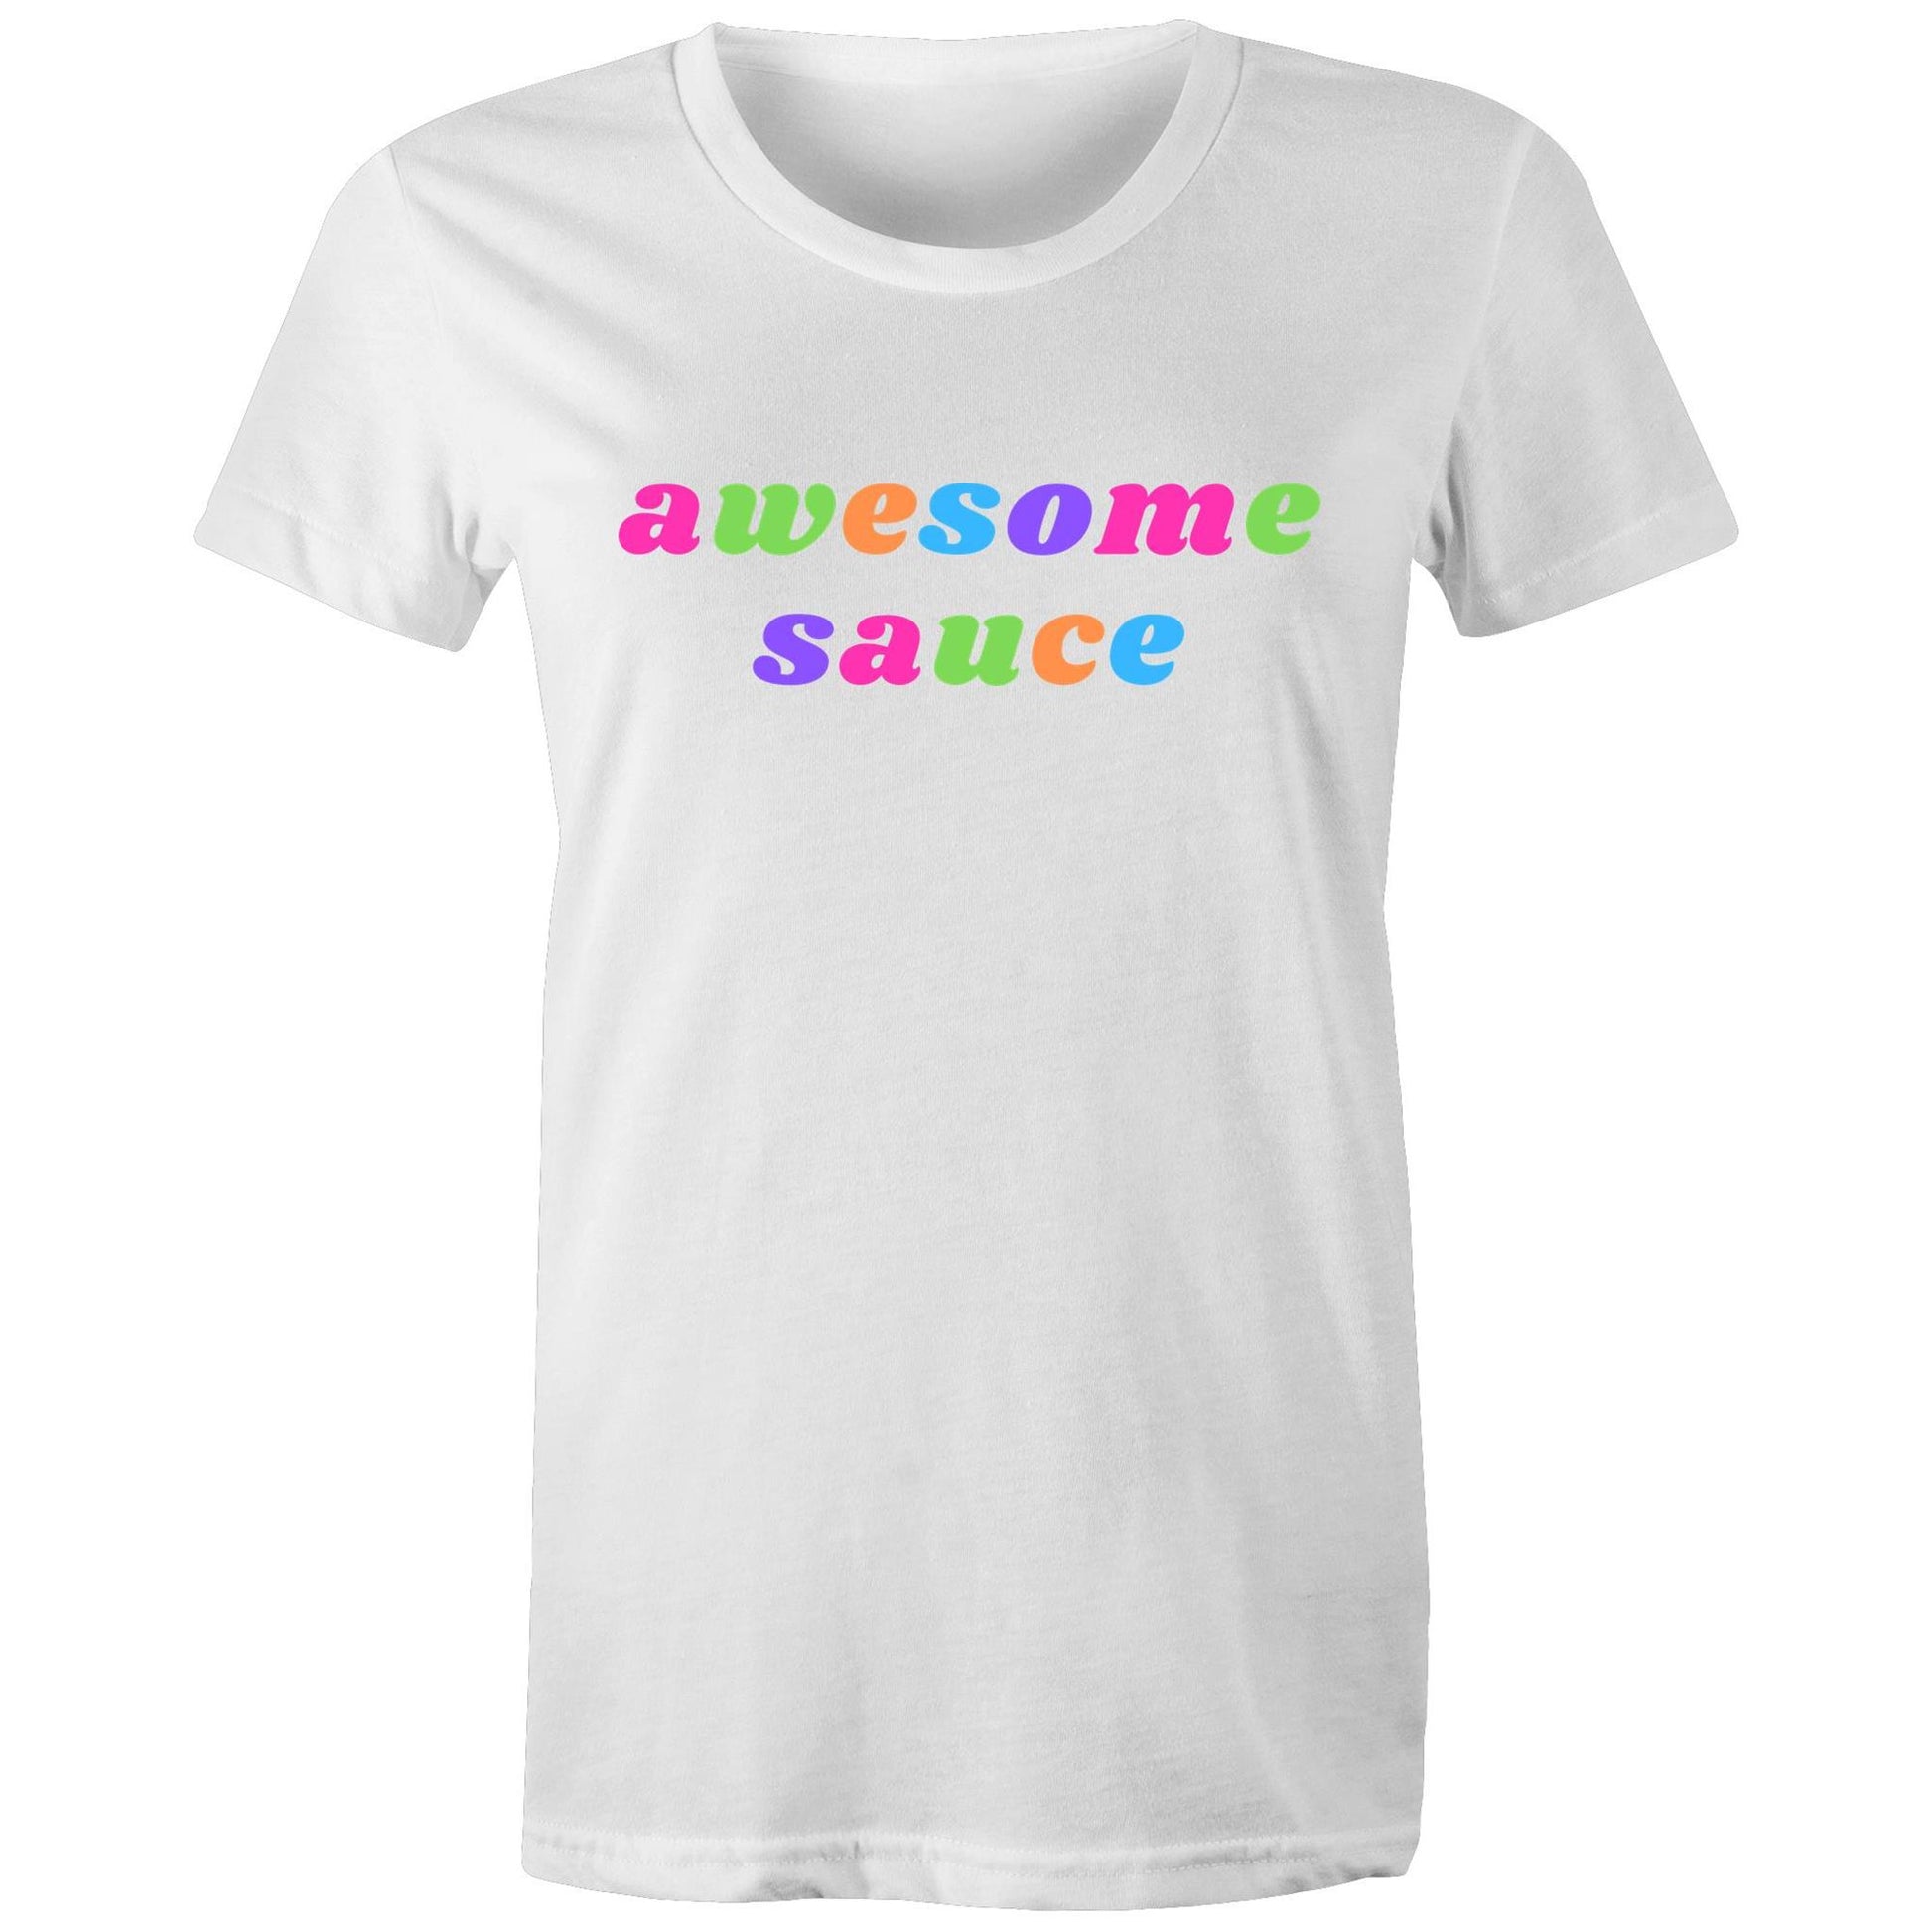 Awesome Sauce - Women's T-shirt White Womens T-shirt Funny Womens